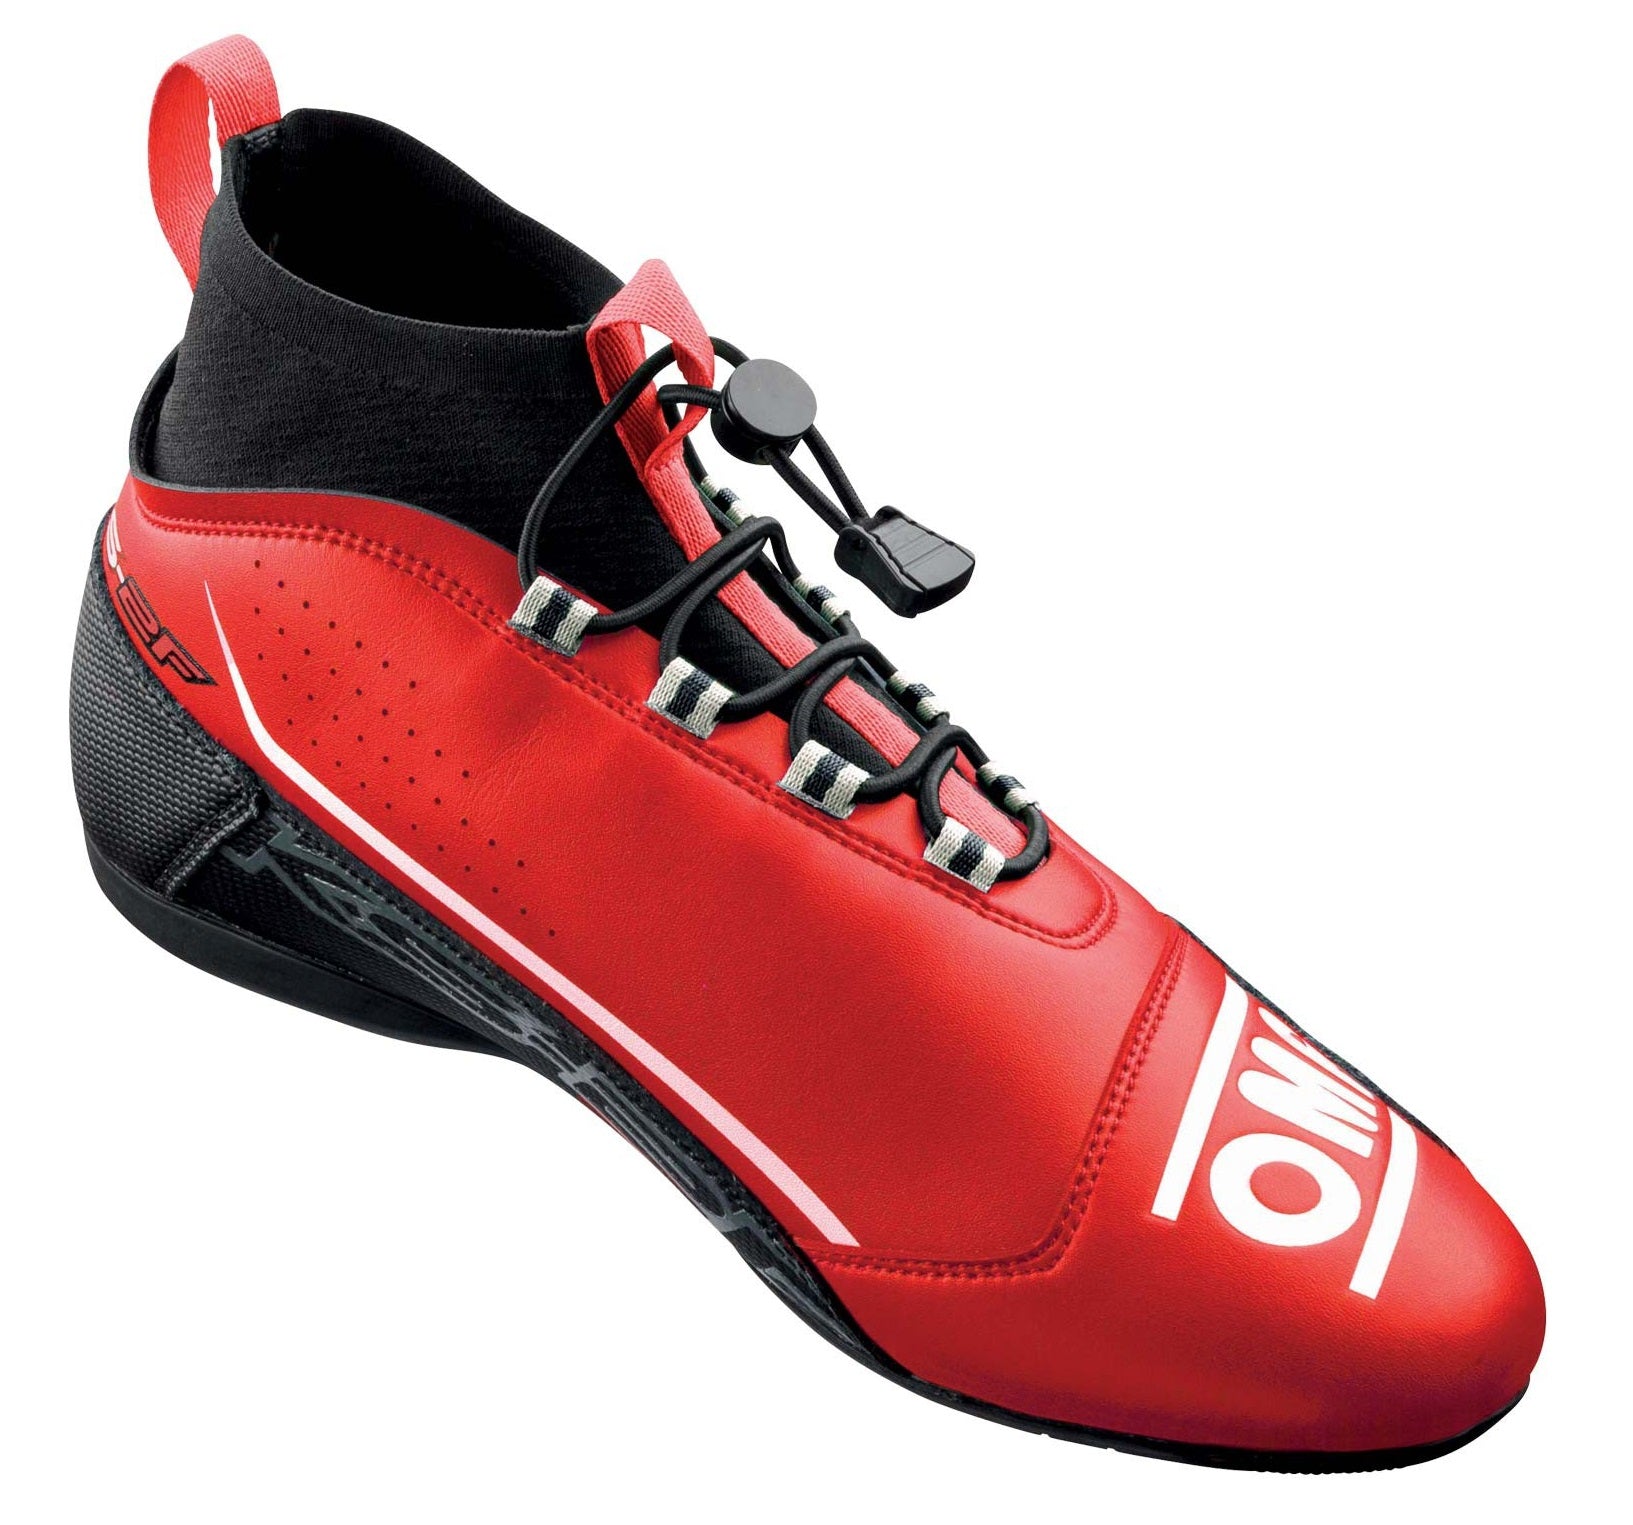 OMP KC0-0830-A01-060-46 KS-2F Karting shoes, red/black, size 46 Photo-1 